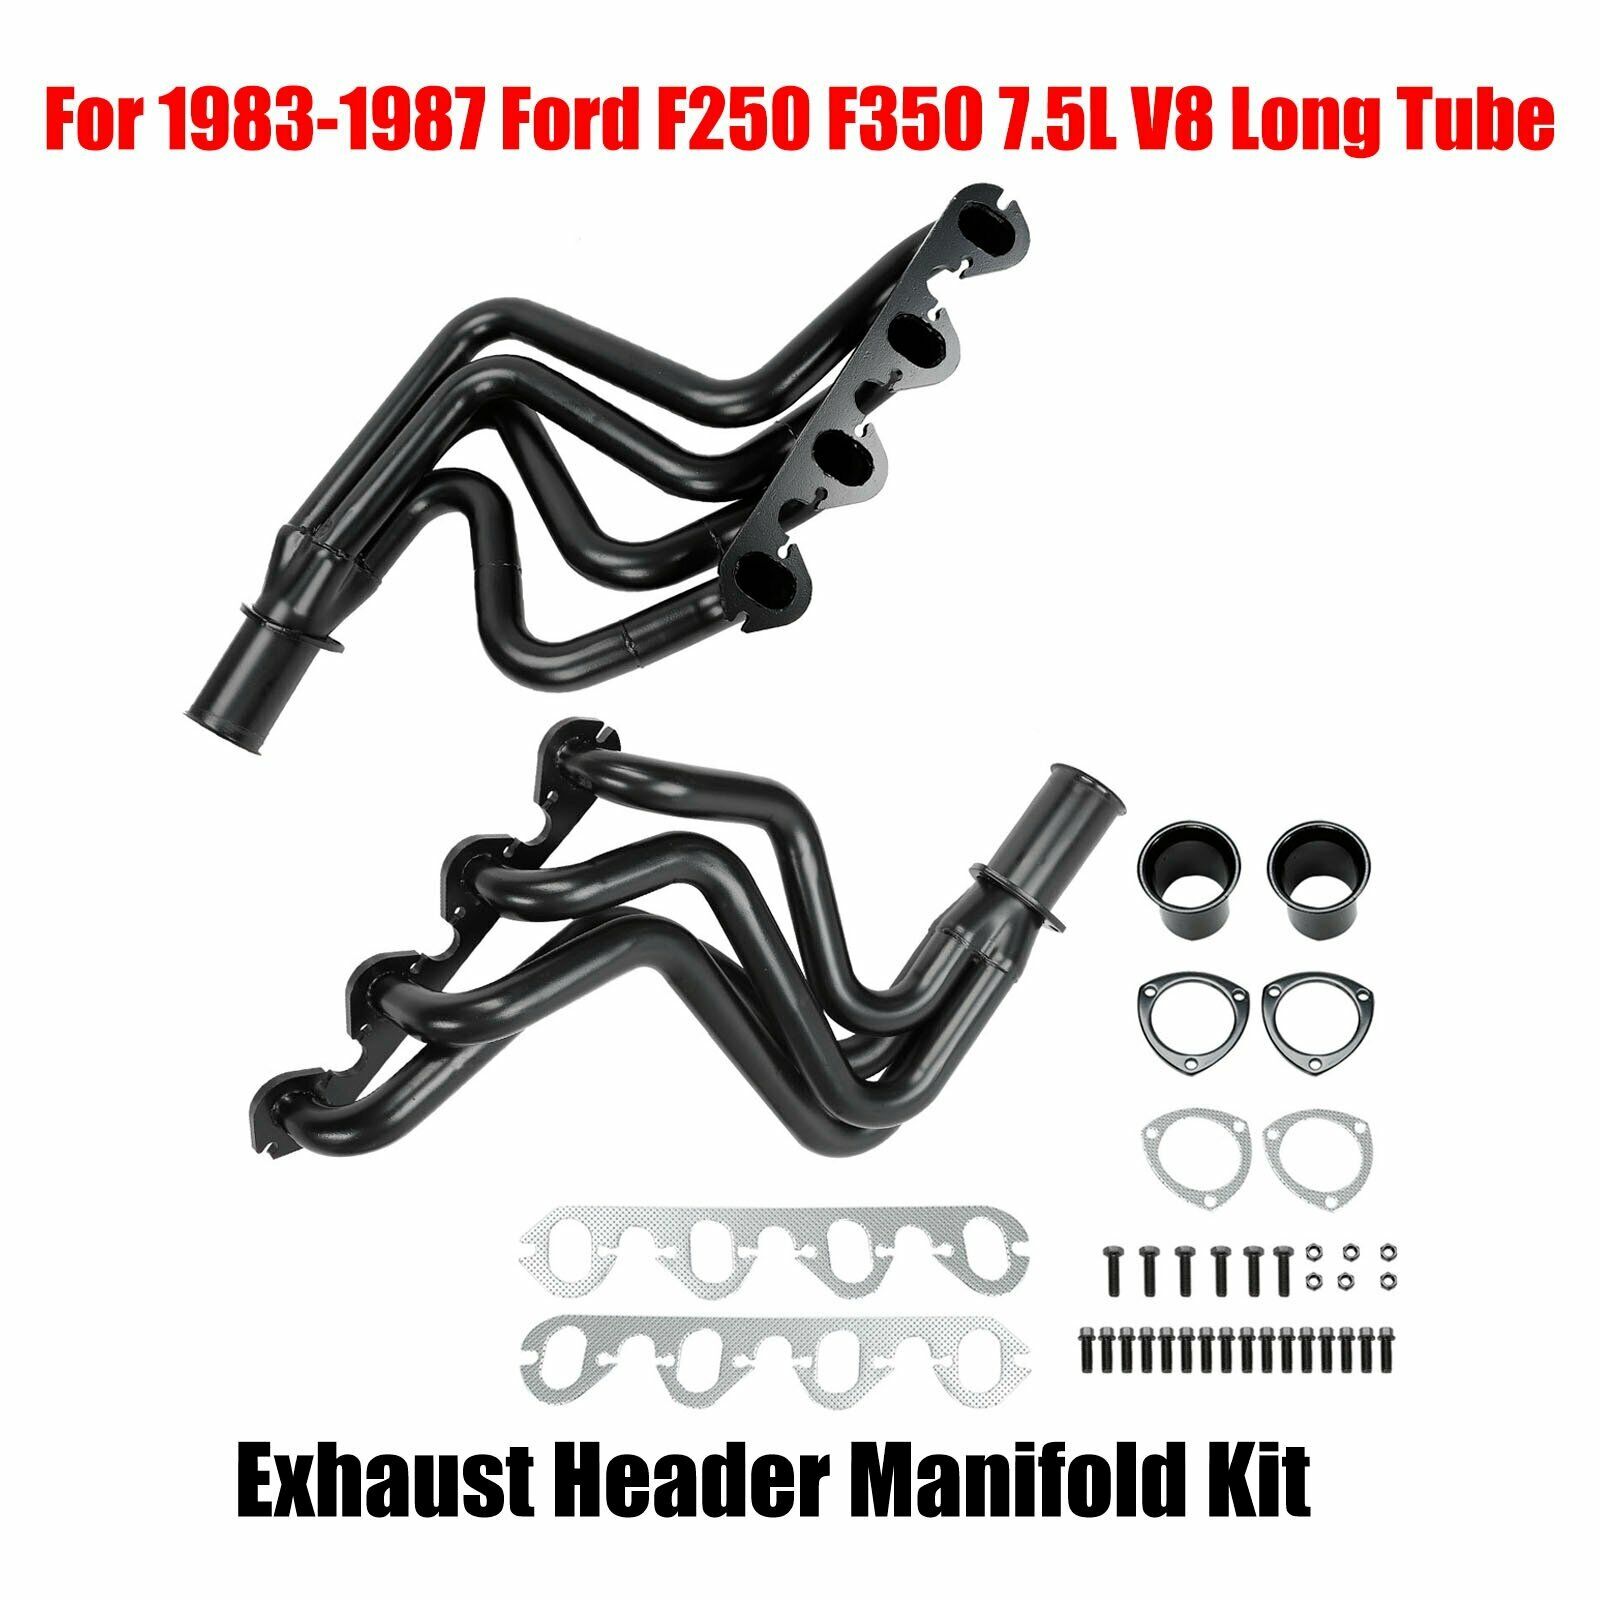 For 1983-1987 Ford F250 F350 7.5L V8 Long Tube Exhaust Header Manifold Kit New